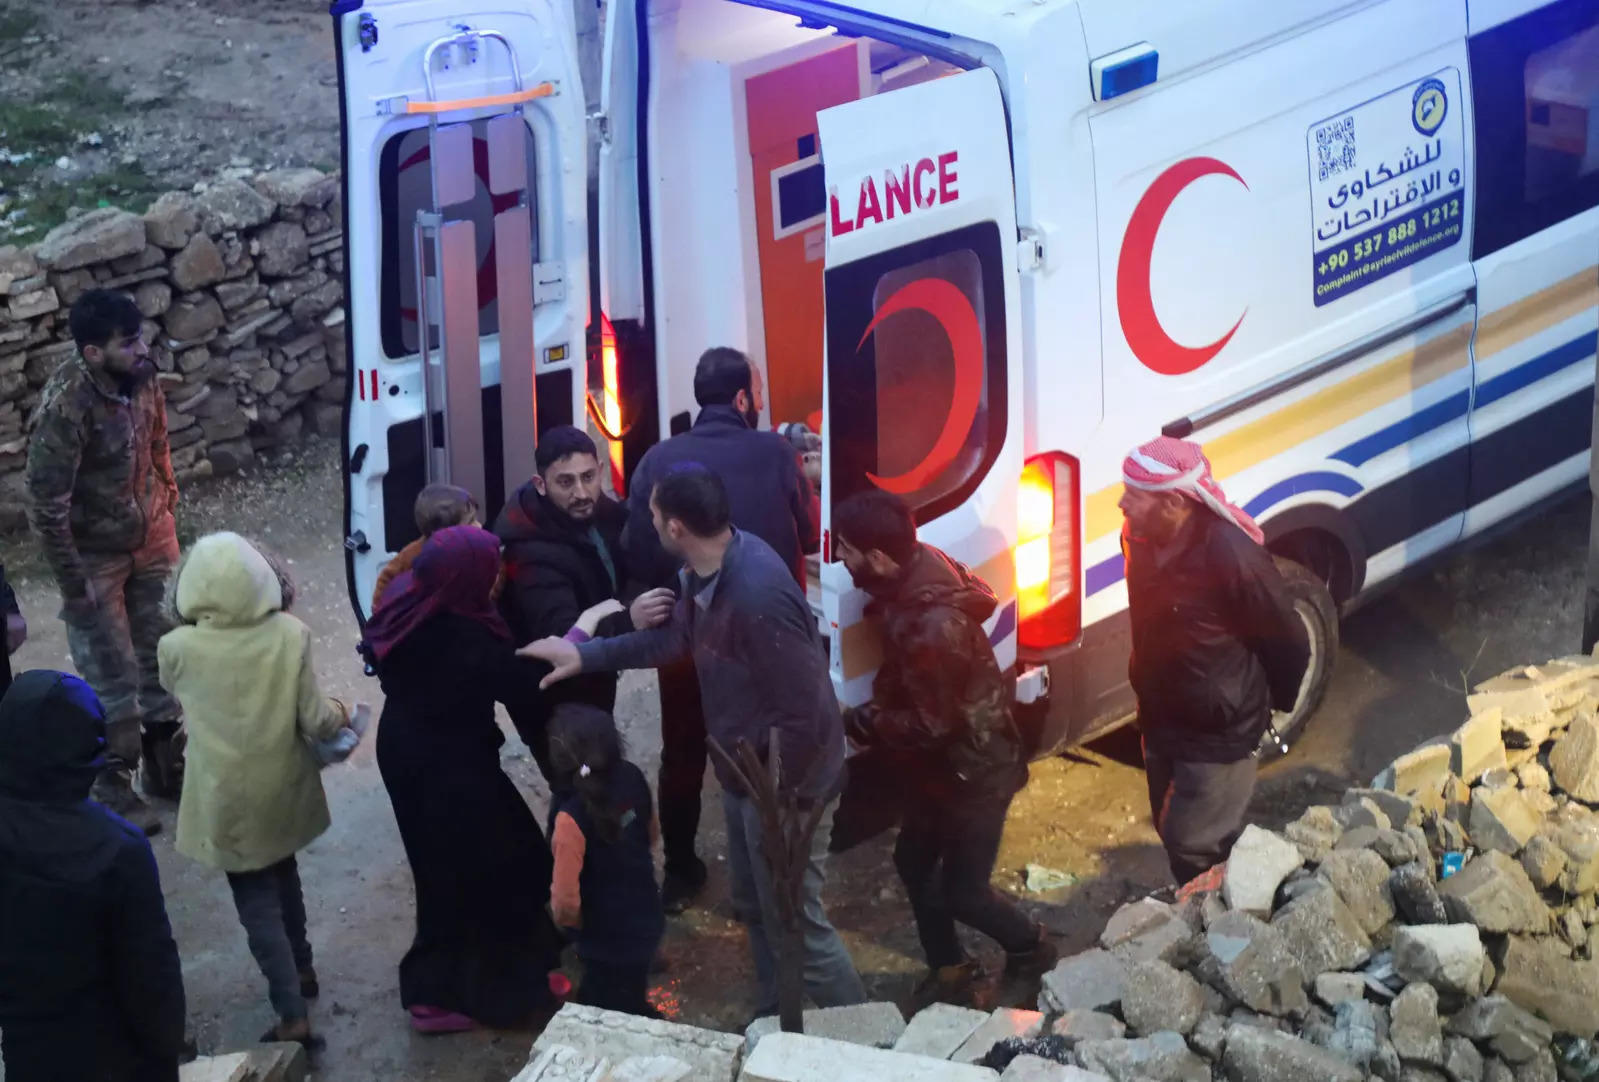 In pictures: Devastating earthquake rocks Turkey, Syria